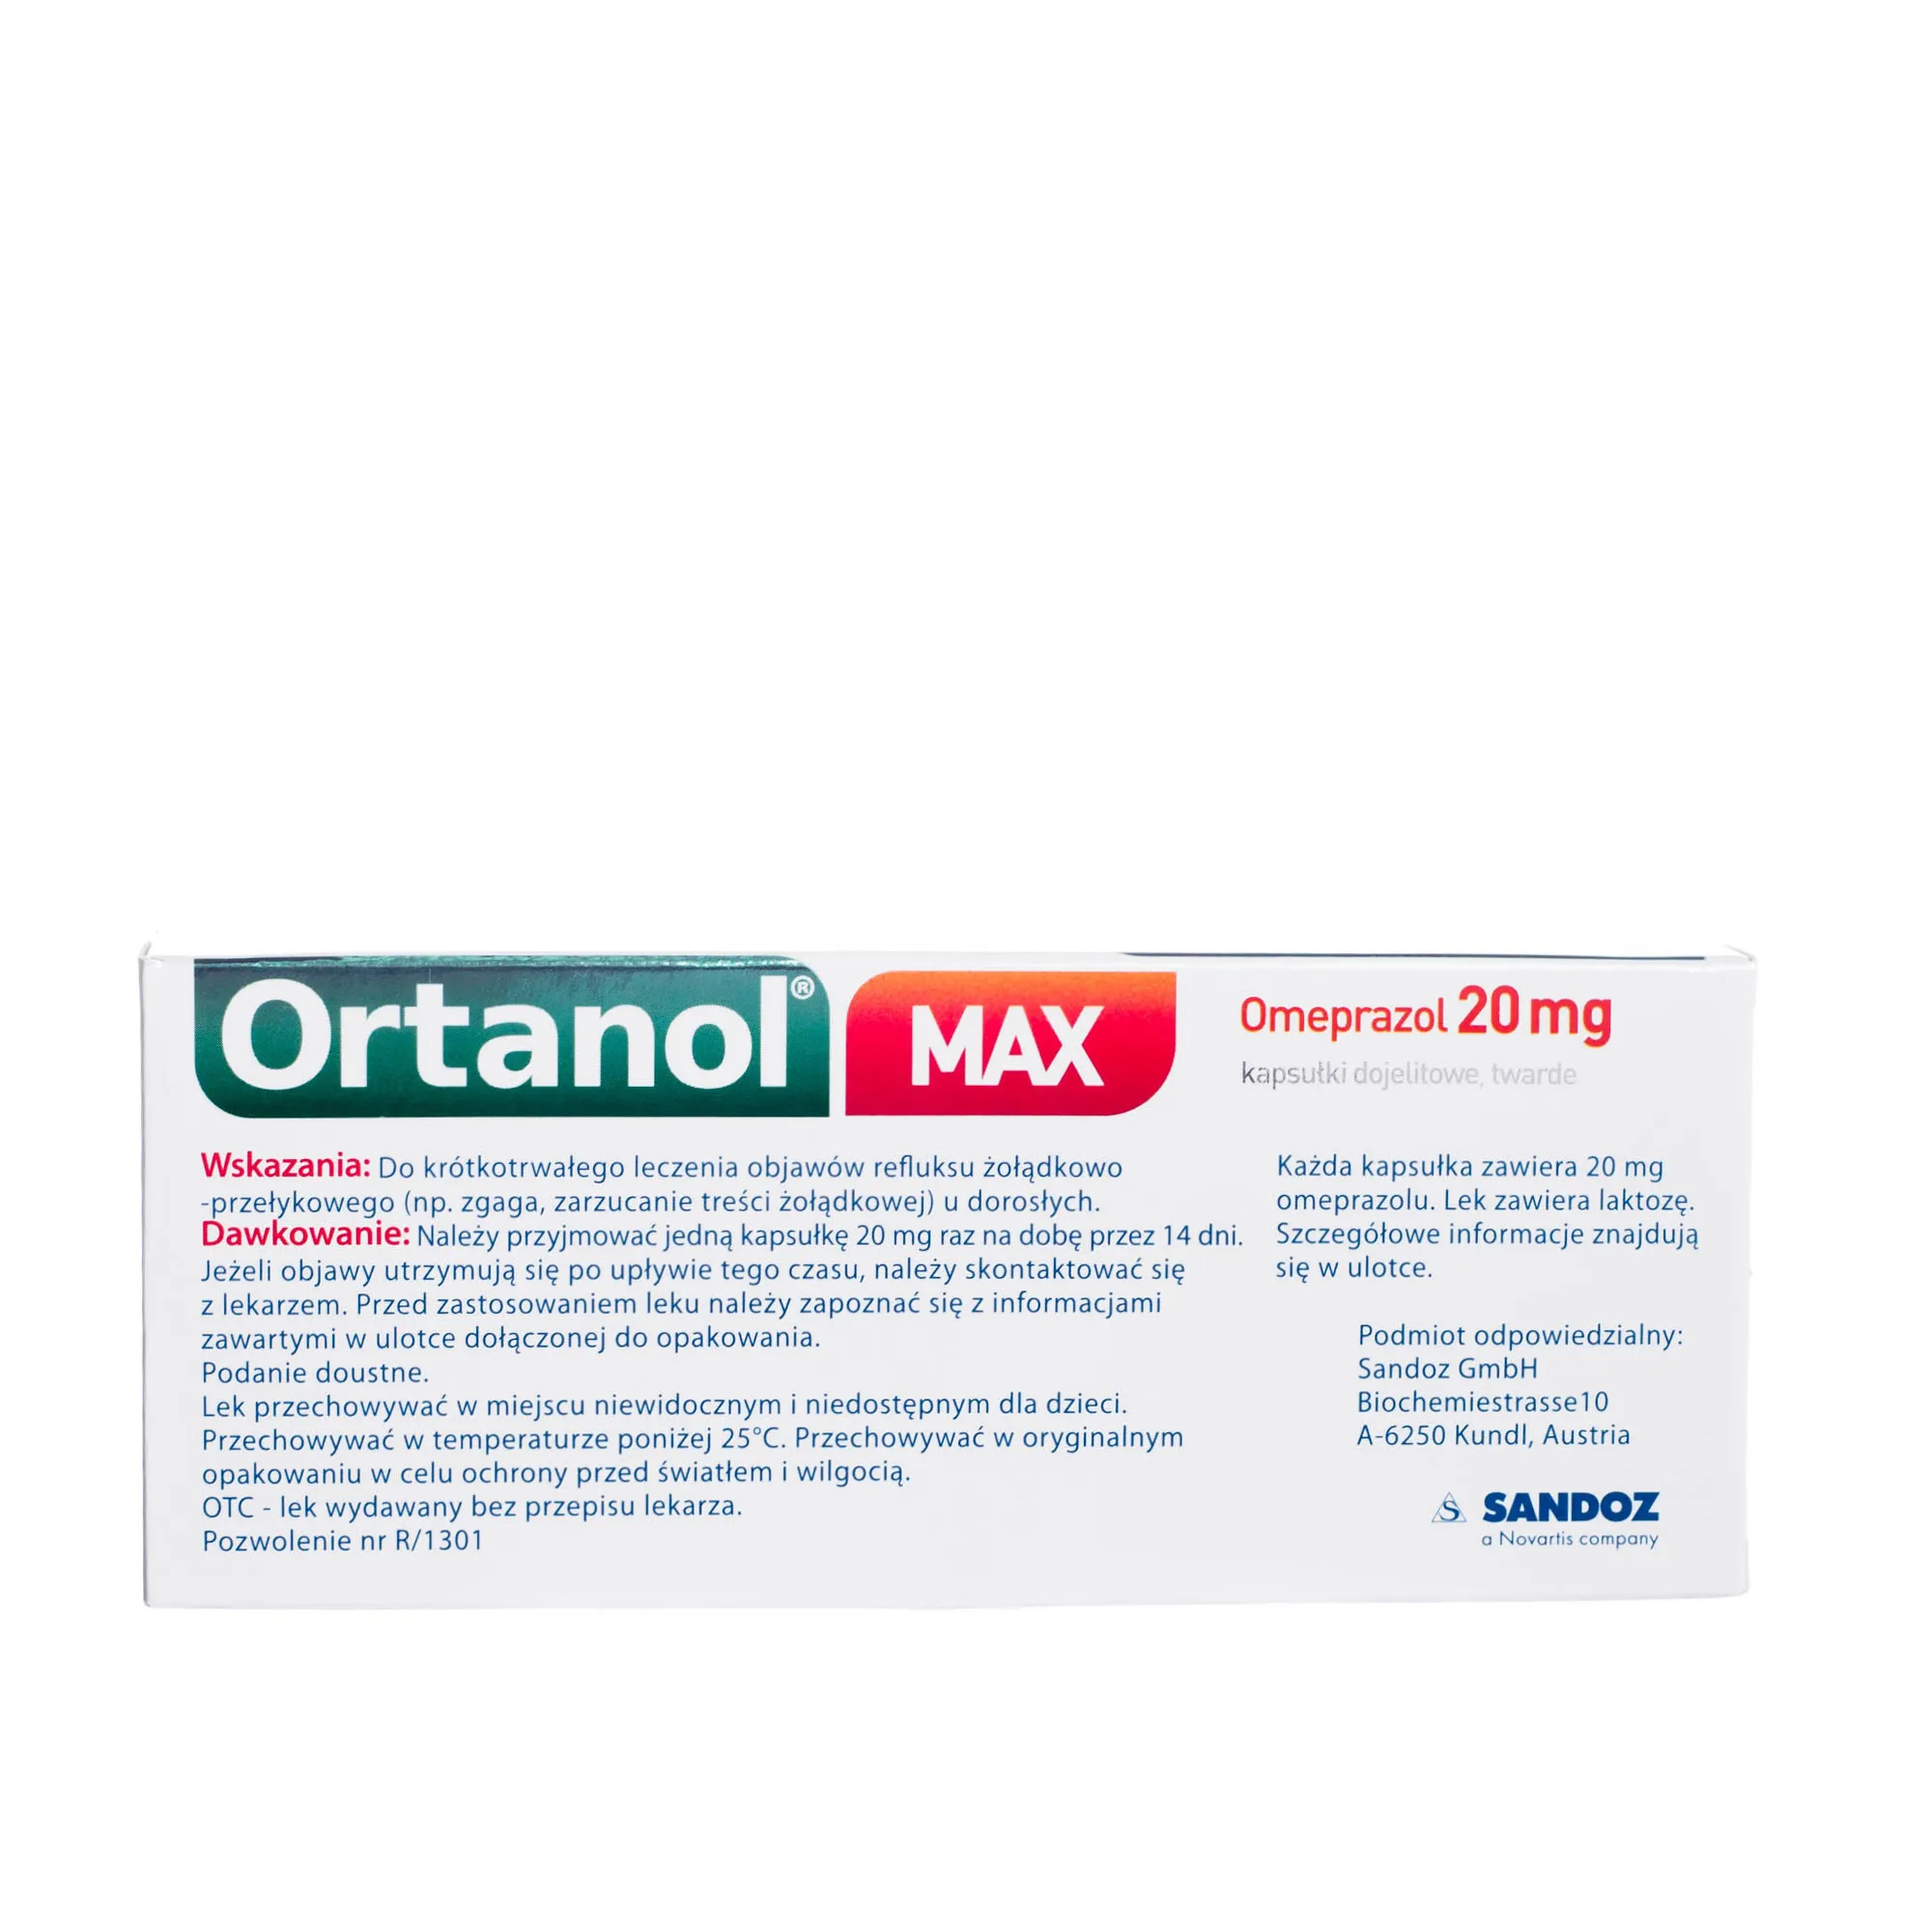 Ortanol Max - kapsułki dojelitowe twarde, 14 kapsułek 